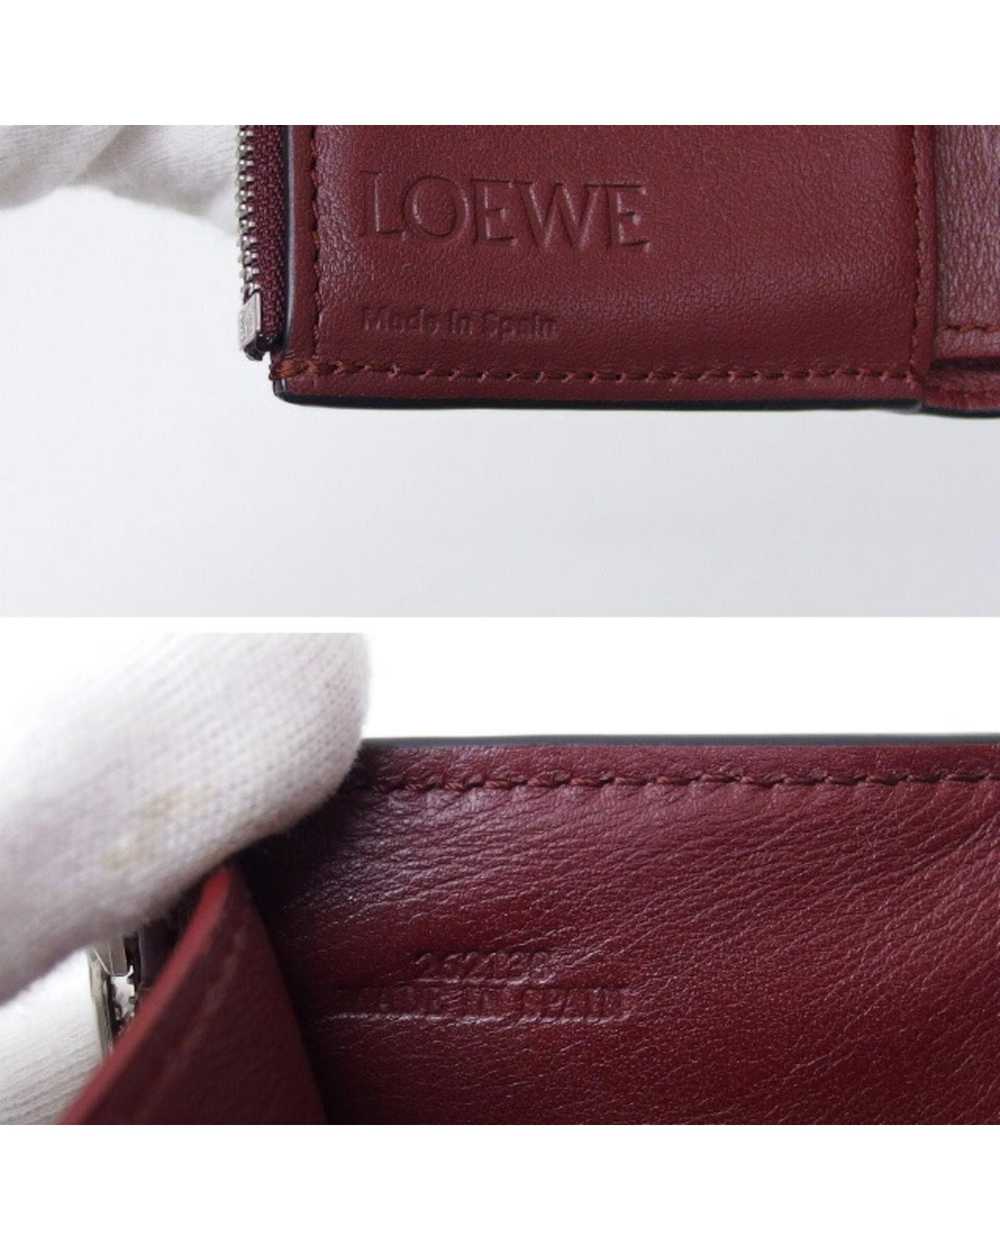 Loewe Leather Tri-Fold Wallet with Loewe Logo - image 10